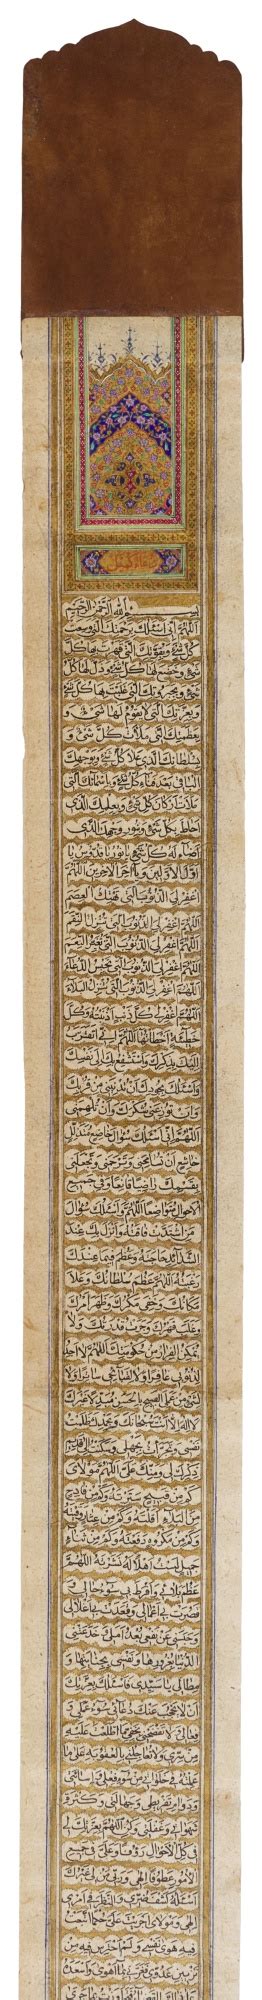 an illuminated prayer scroll persia qajar mid 19th century arts of the islamic world